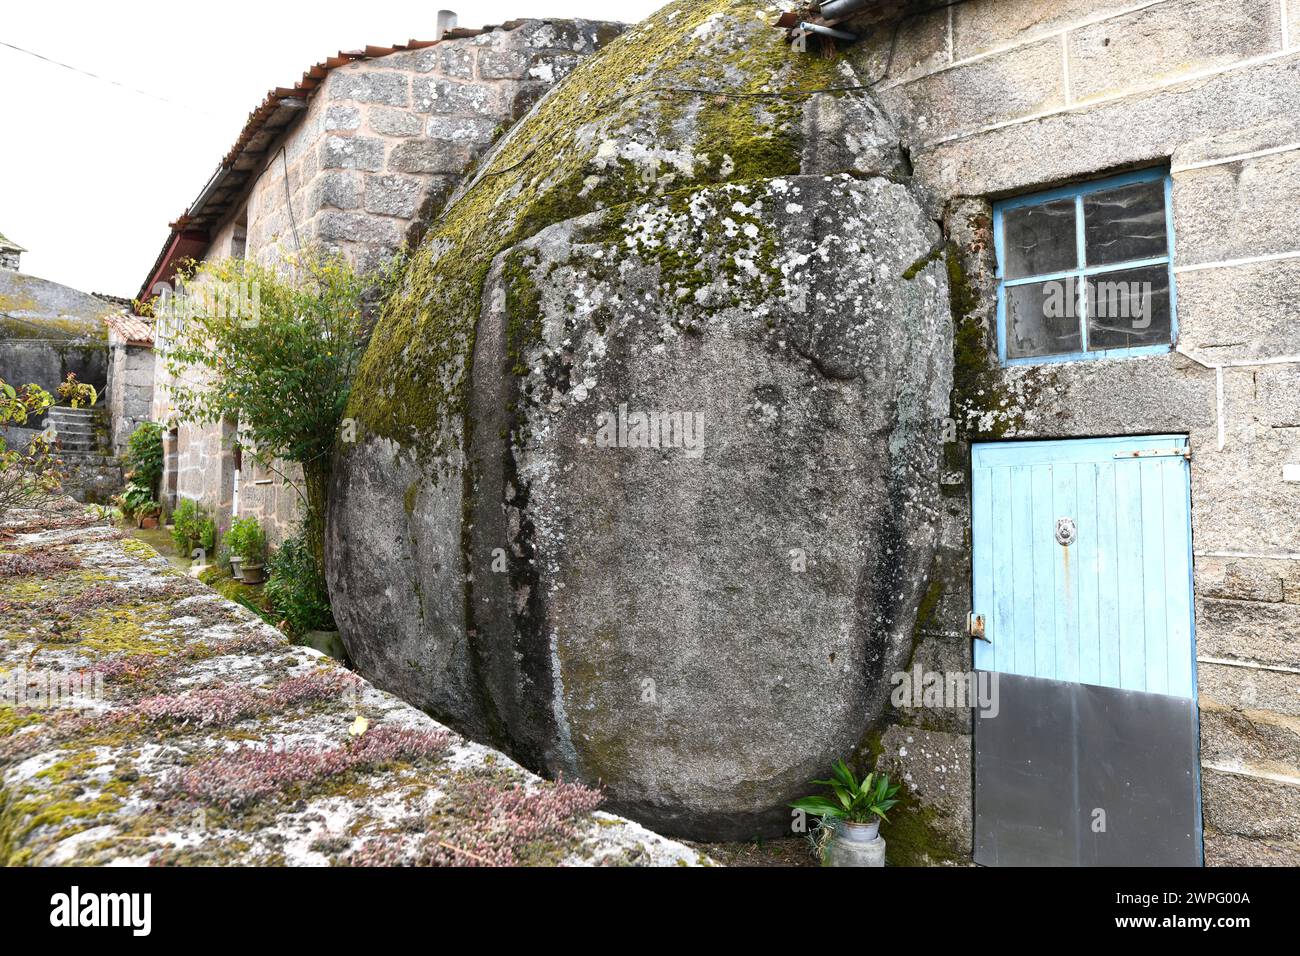 Nogueira de Ramuin. Case costruite tra blocchi di granito. Ribeira Sacra, Ourense, Galizia, Spagna. Foto Stock